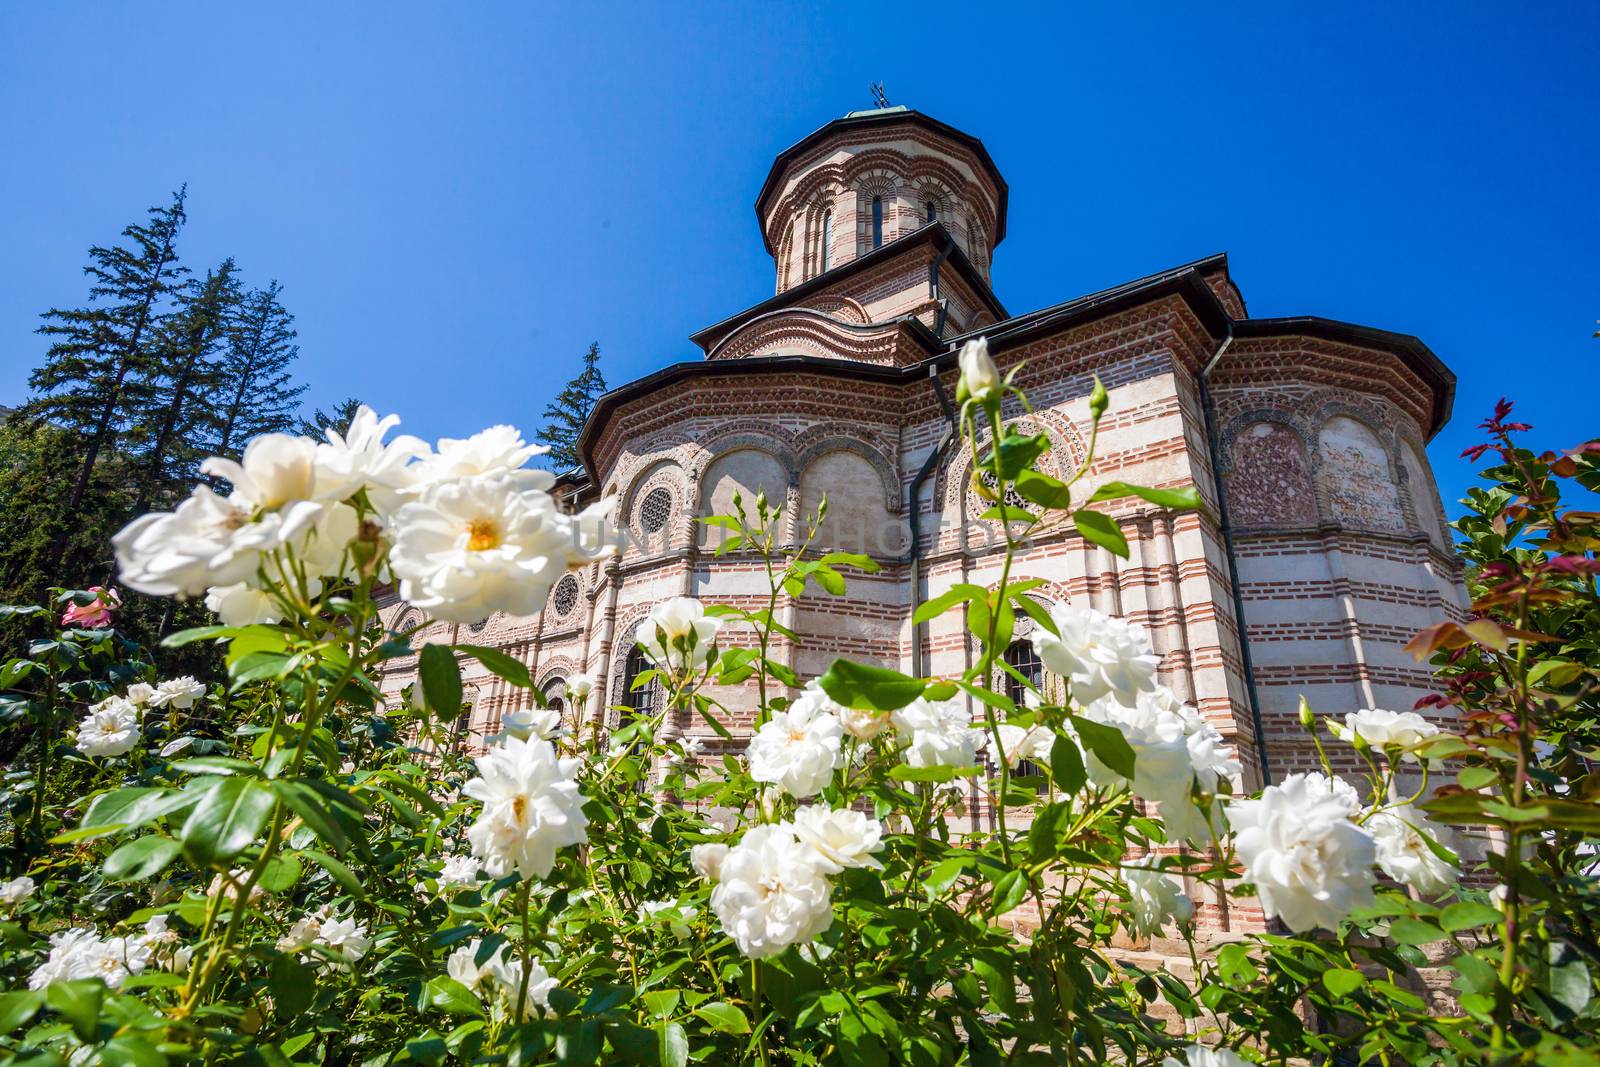 Cozia, Romania - Septemper 2, 2012: White roses flowers in front of Cozia monastery church on a sunny summer day, Romania